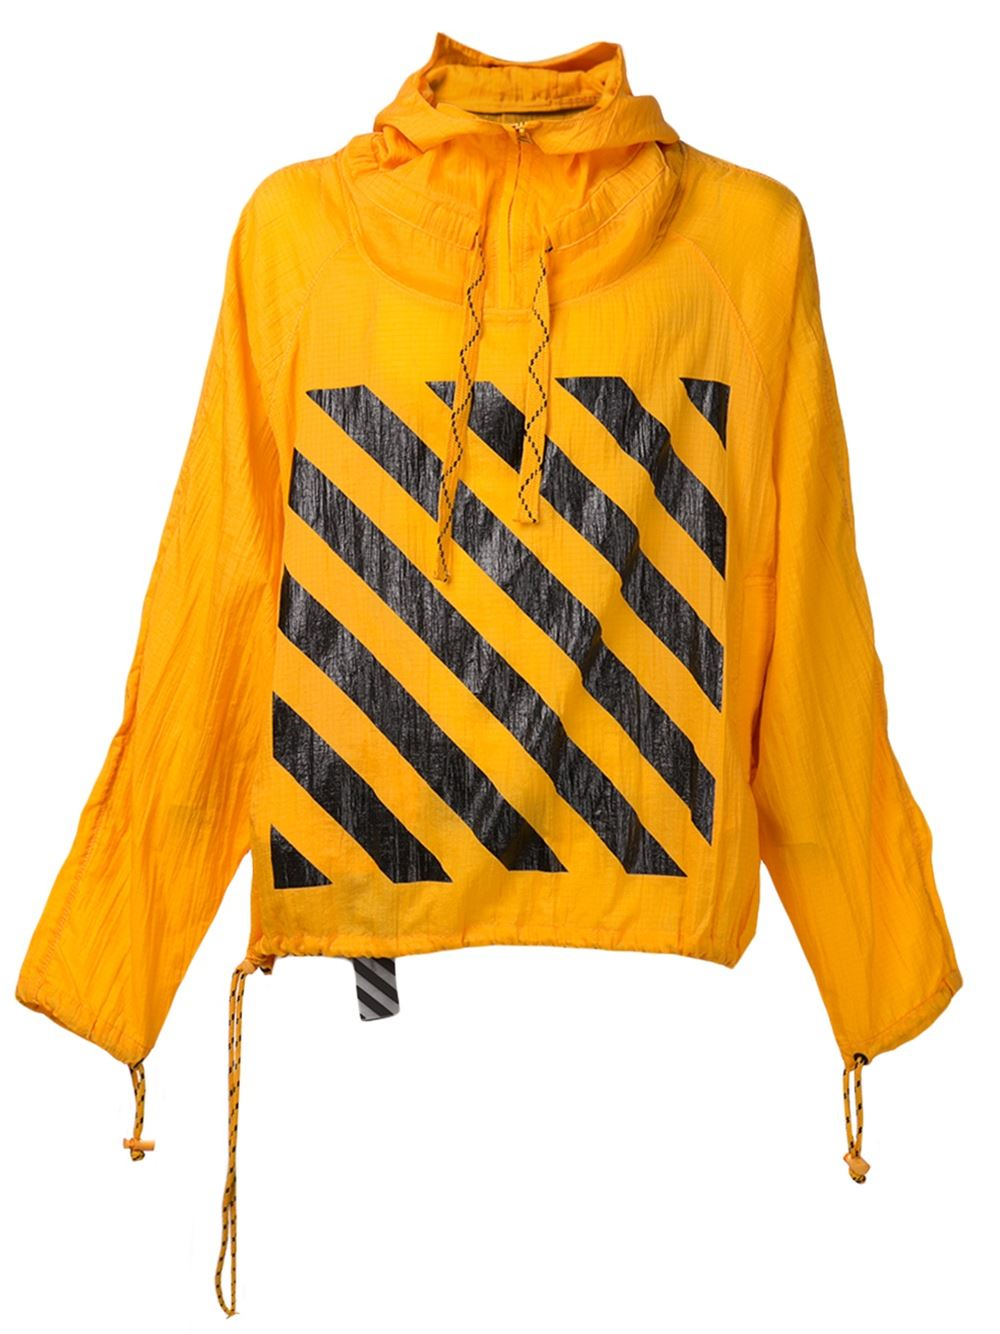 White Windbreaker Jacket, Yellow Man Cargo Jacket